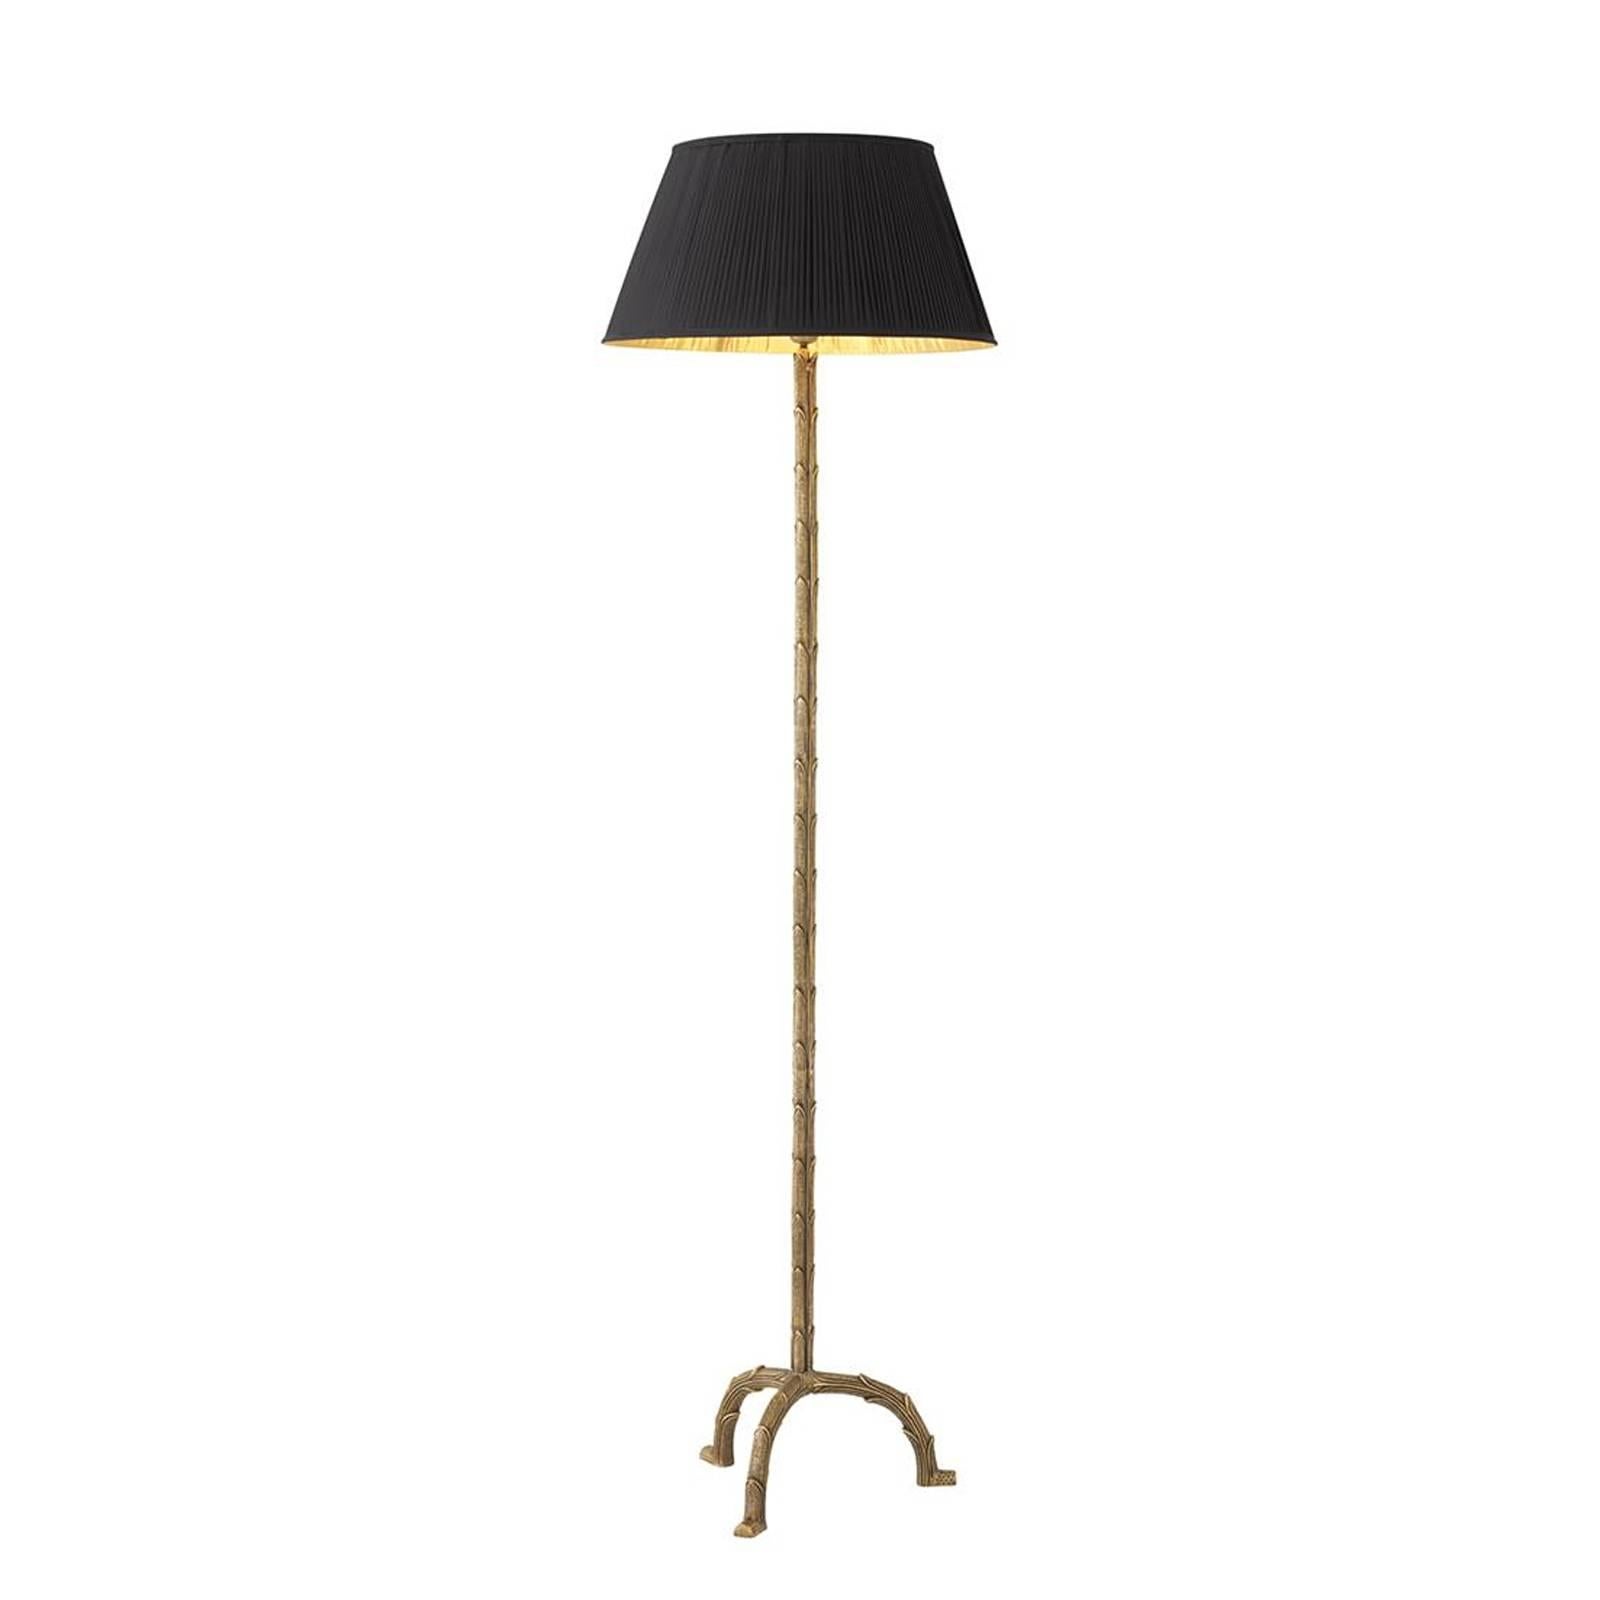 Chambon Floor Lamp in Vintage Brass Finish